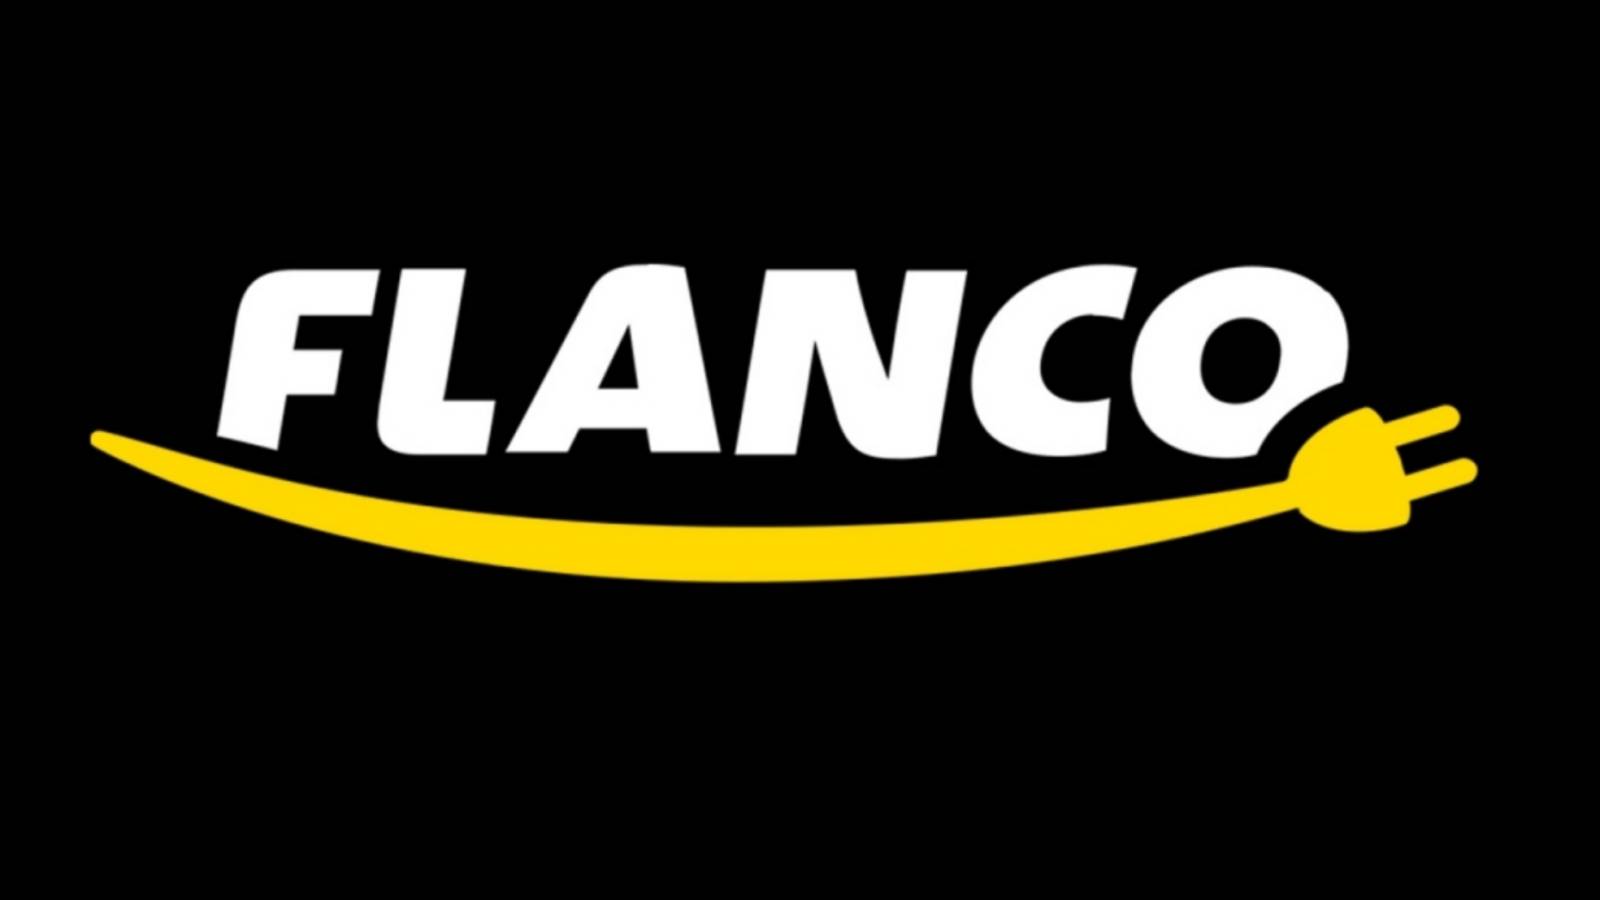 Flanco Televisions PUOLIALENNE BLACK FRIDAY 2020